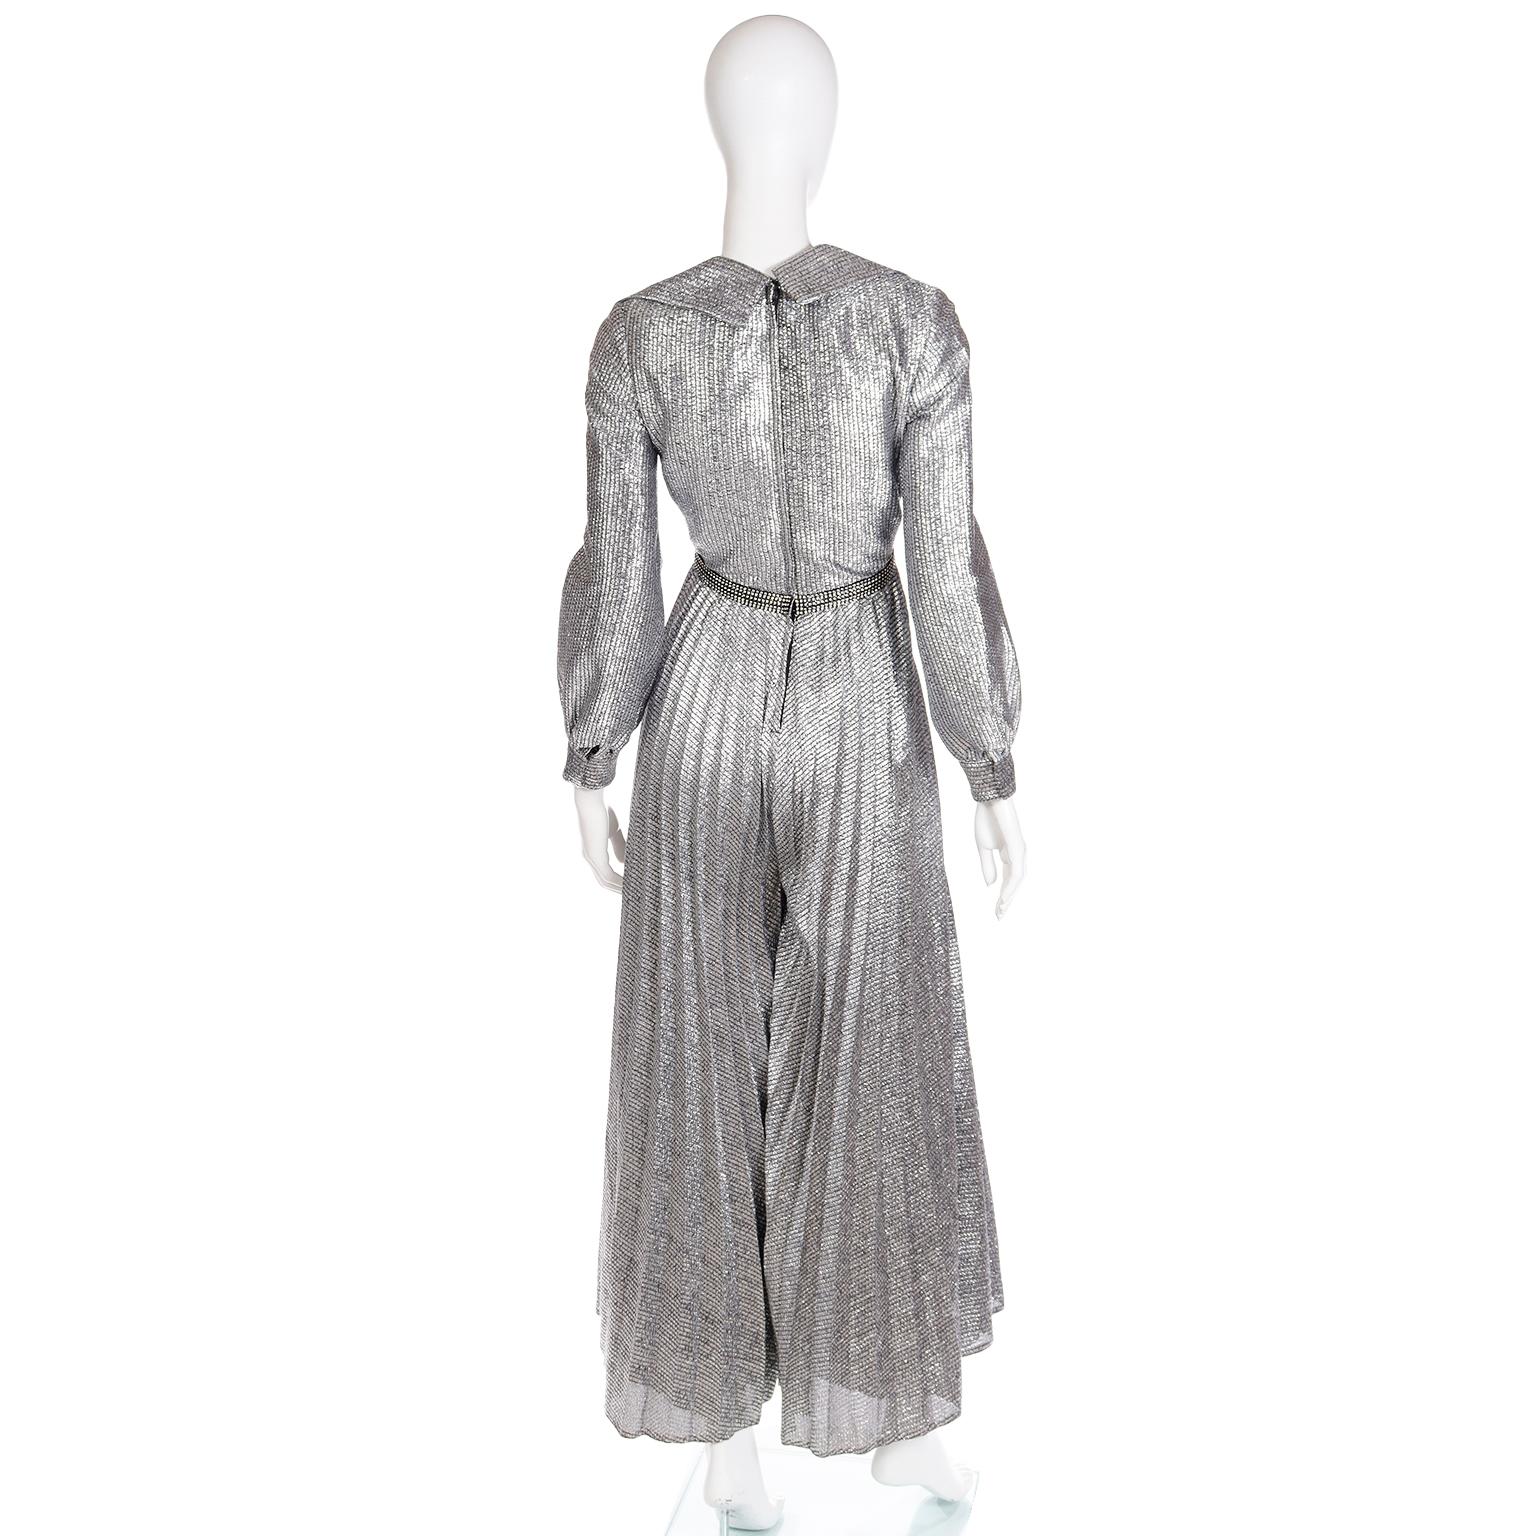 Vintage 1960s 1970s Silver Sparkle Palazzo Jumpsuit Evening Dress Alternative For Sale 5